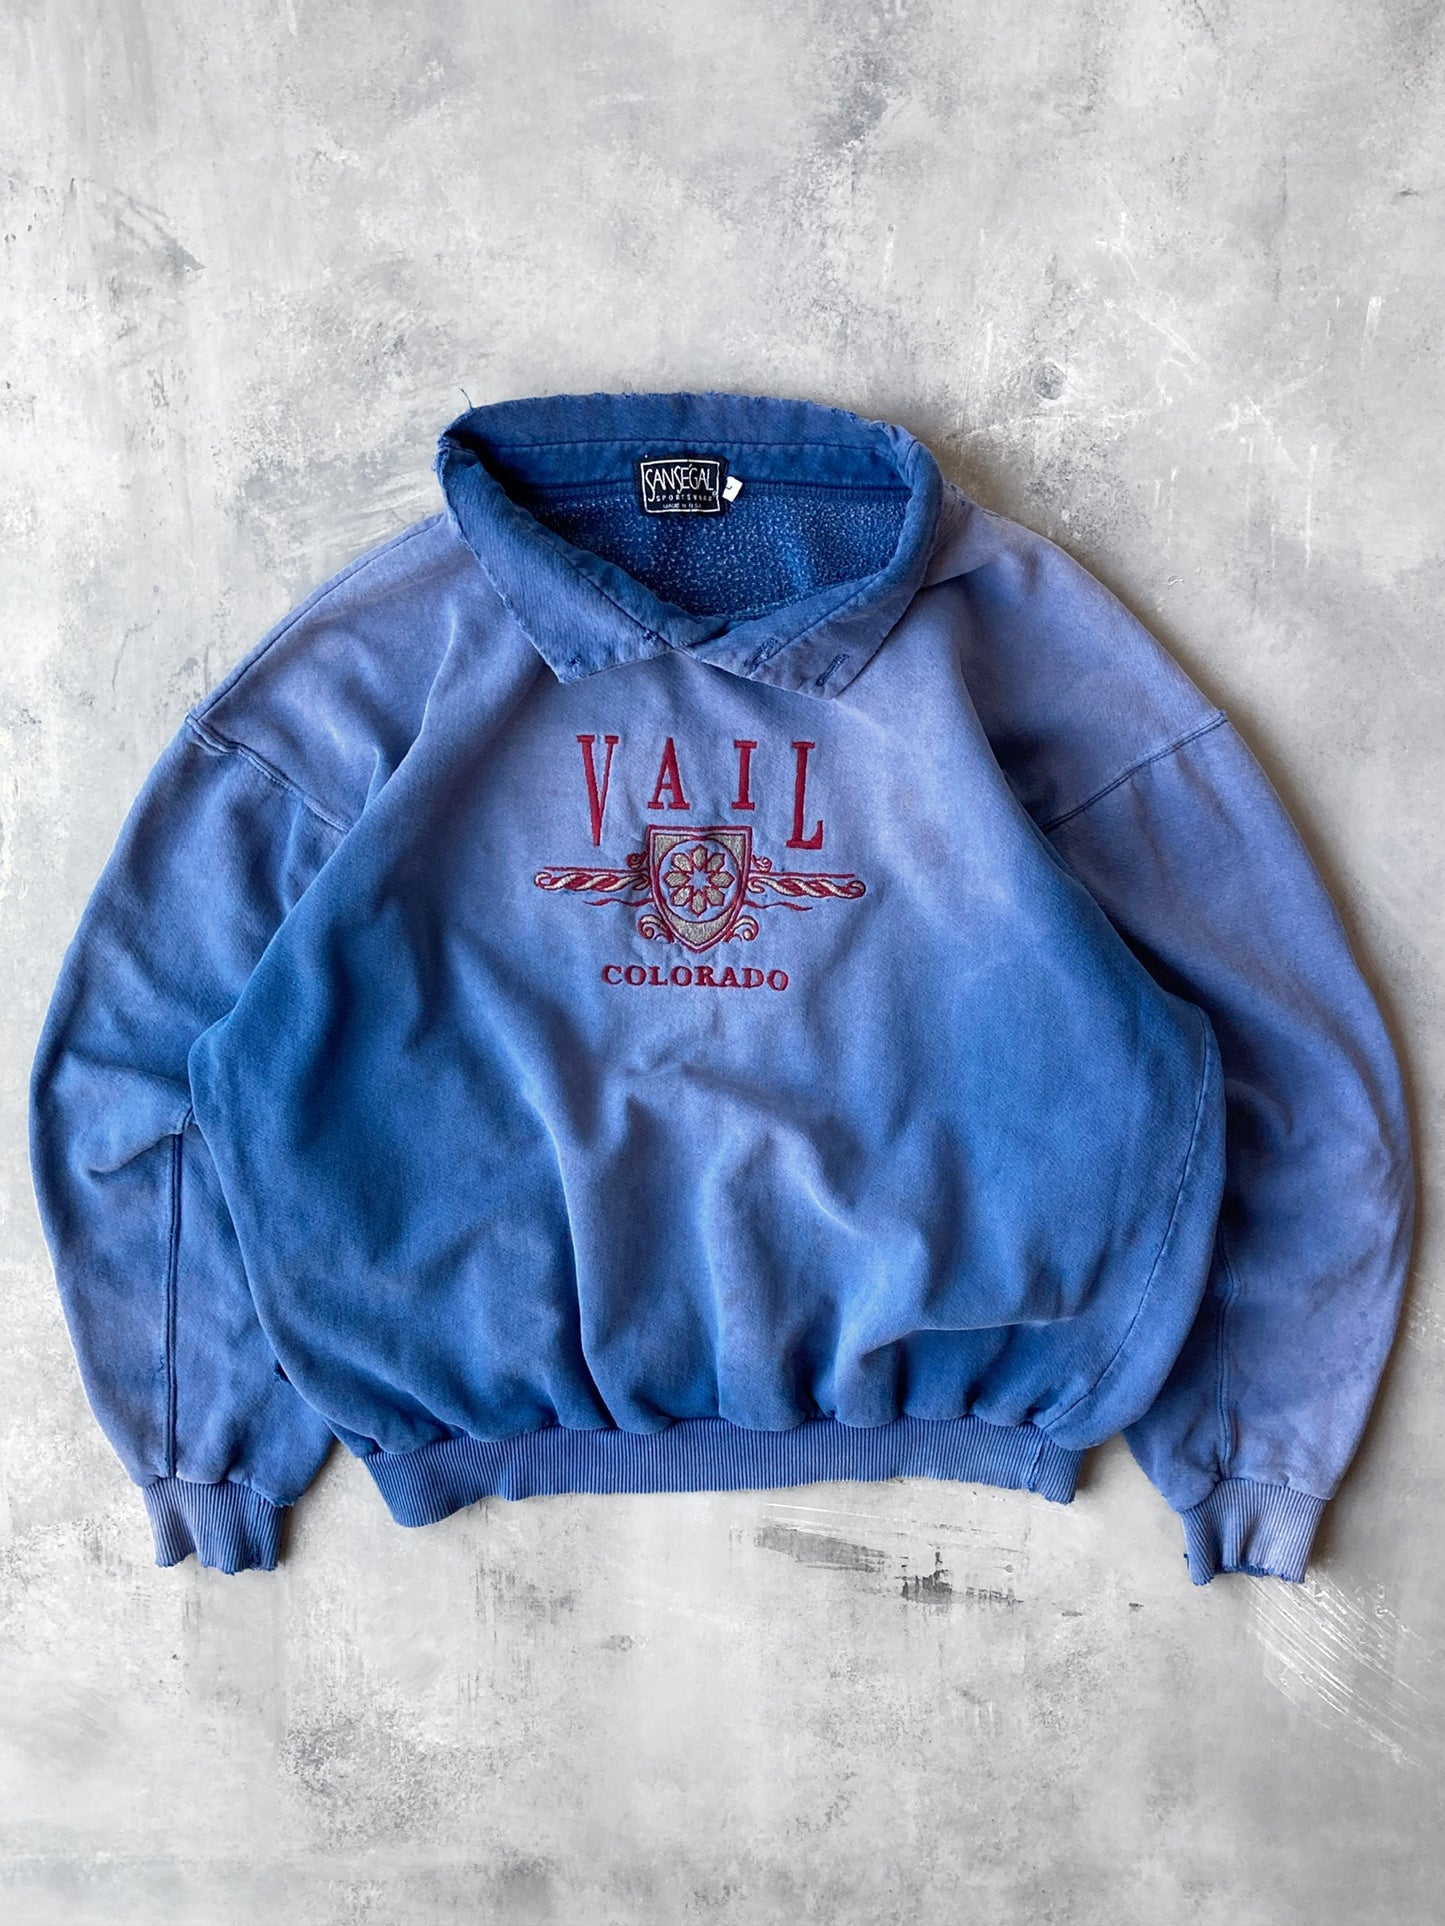 Vail Colorado Sweatshirt 90's - Large